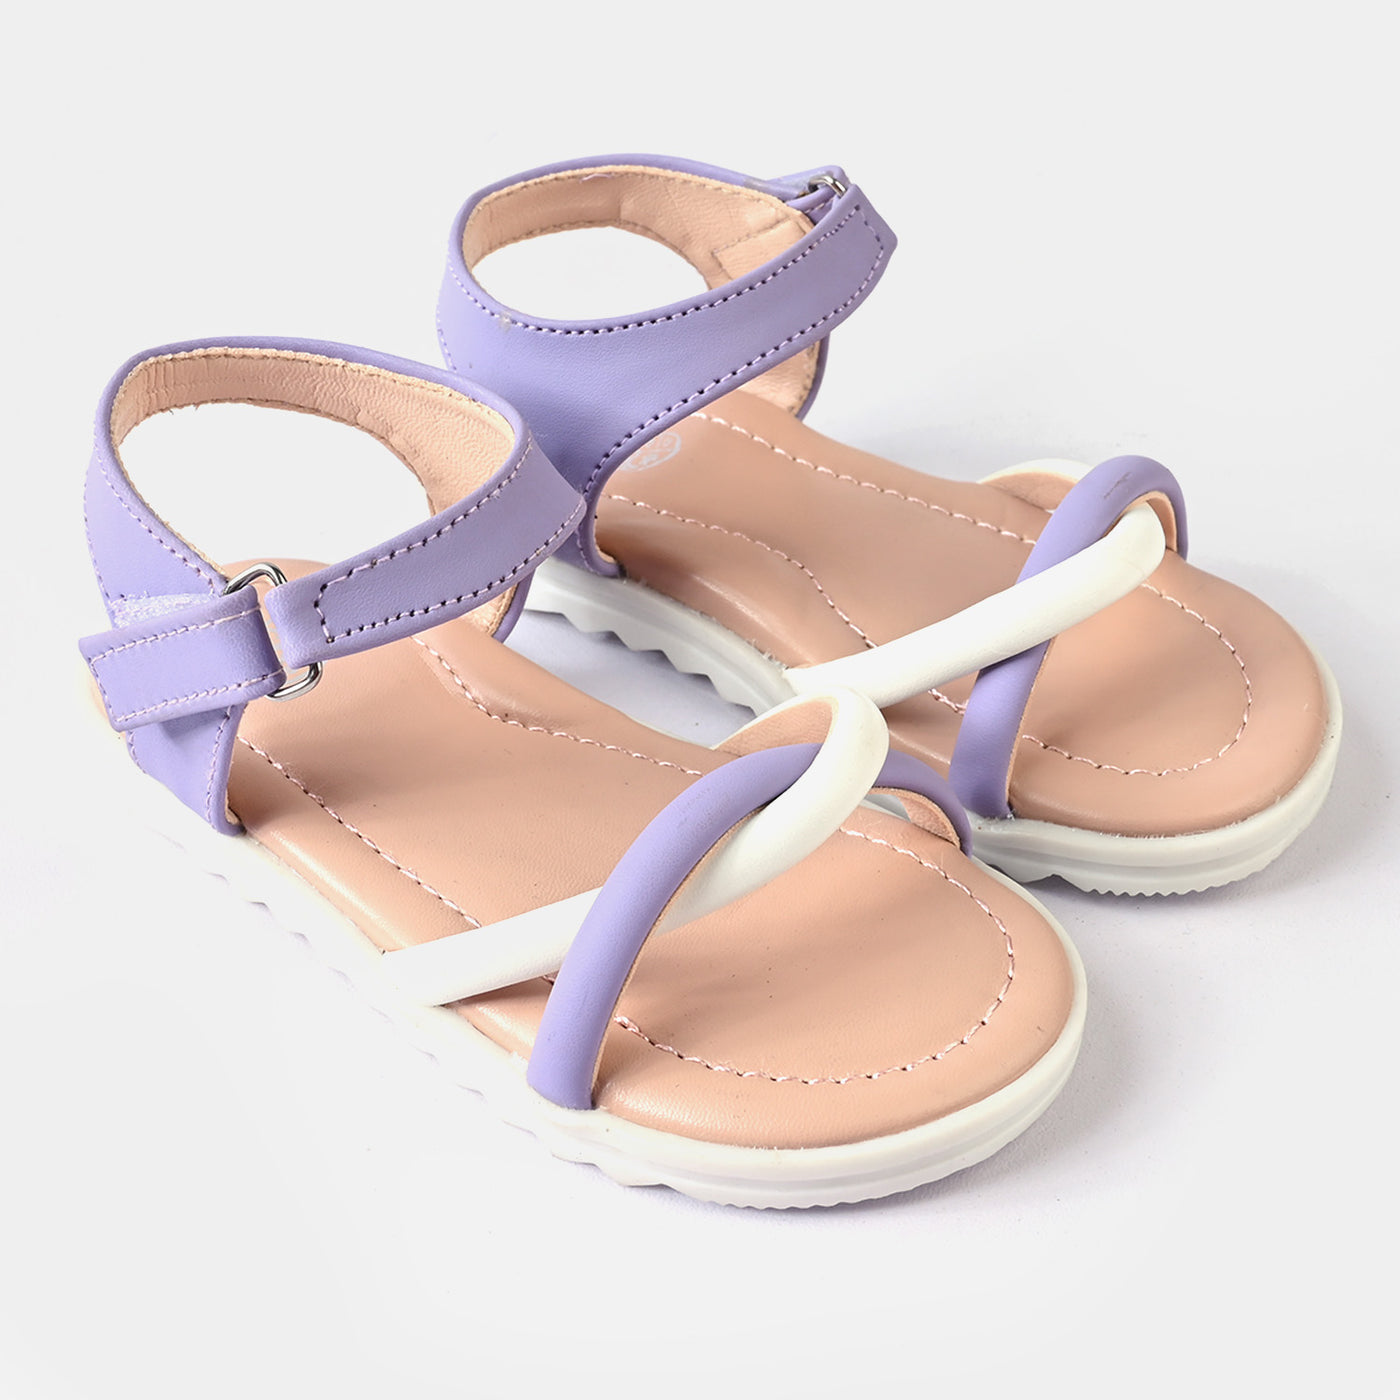 Girls Sandal 1286-Purple